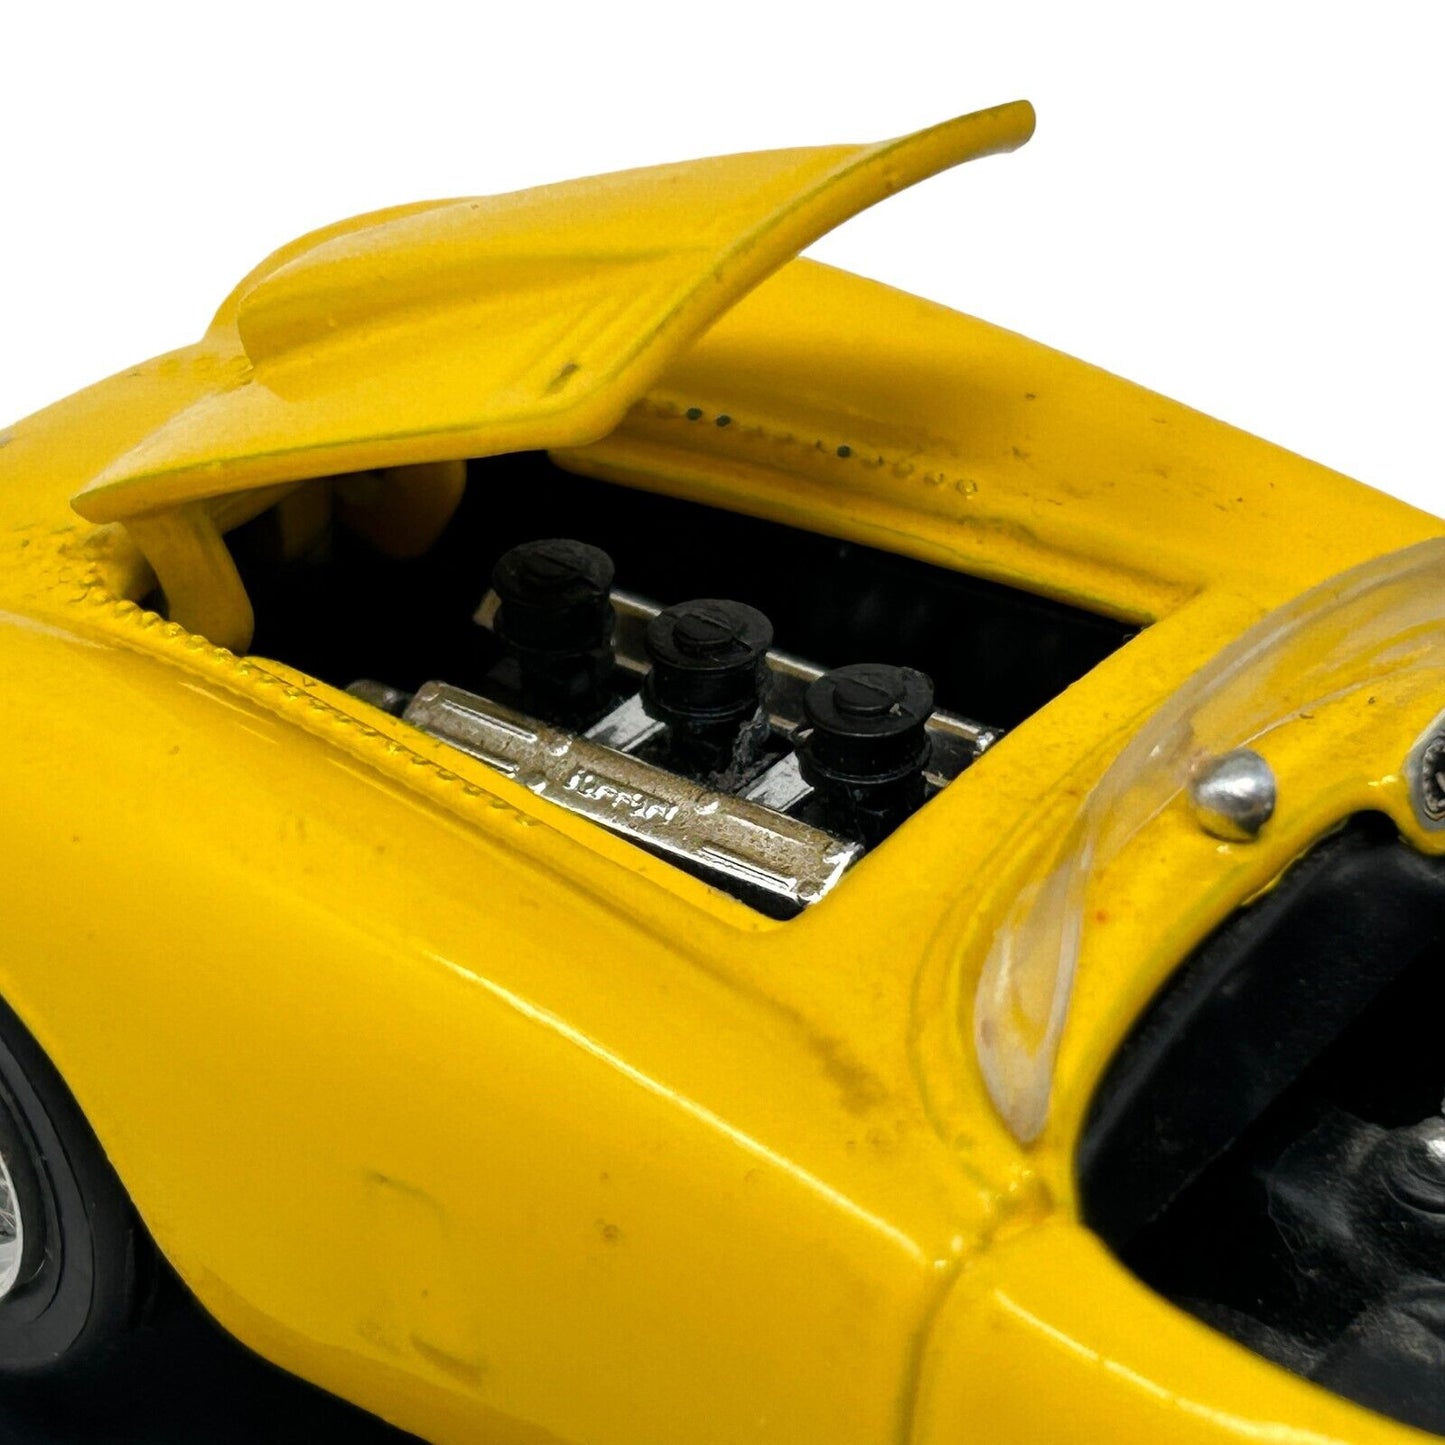 1954 Ferrari 375 Plus Le Mans Top Model Diecast Car Yellow Made In Italy 1/43